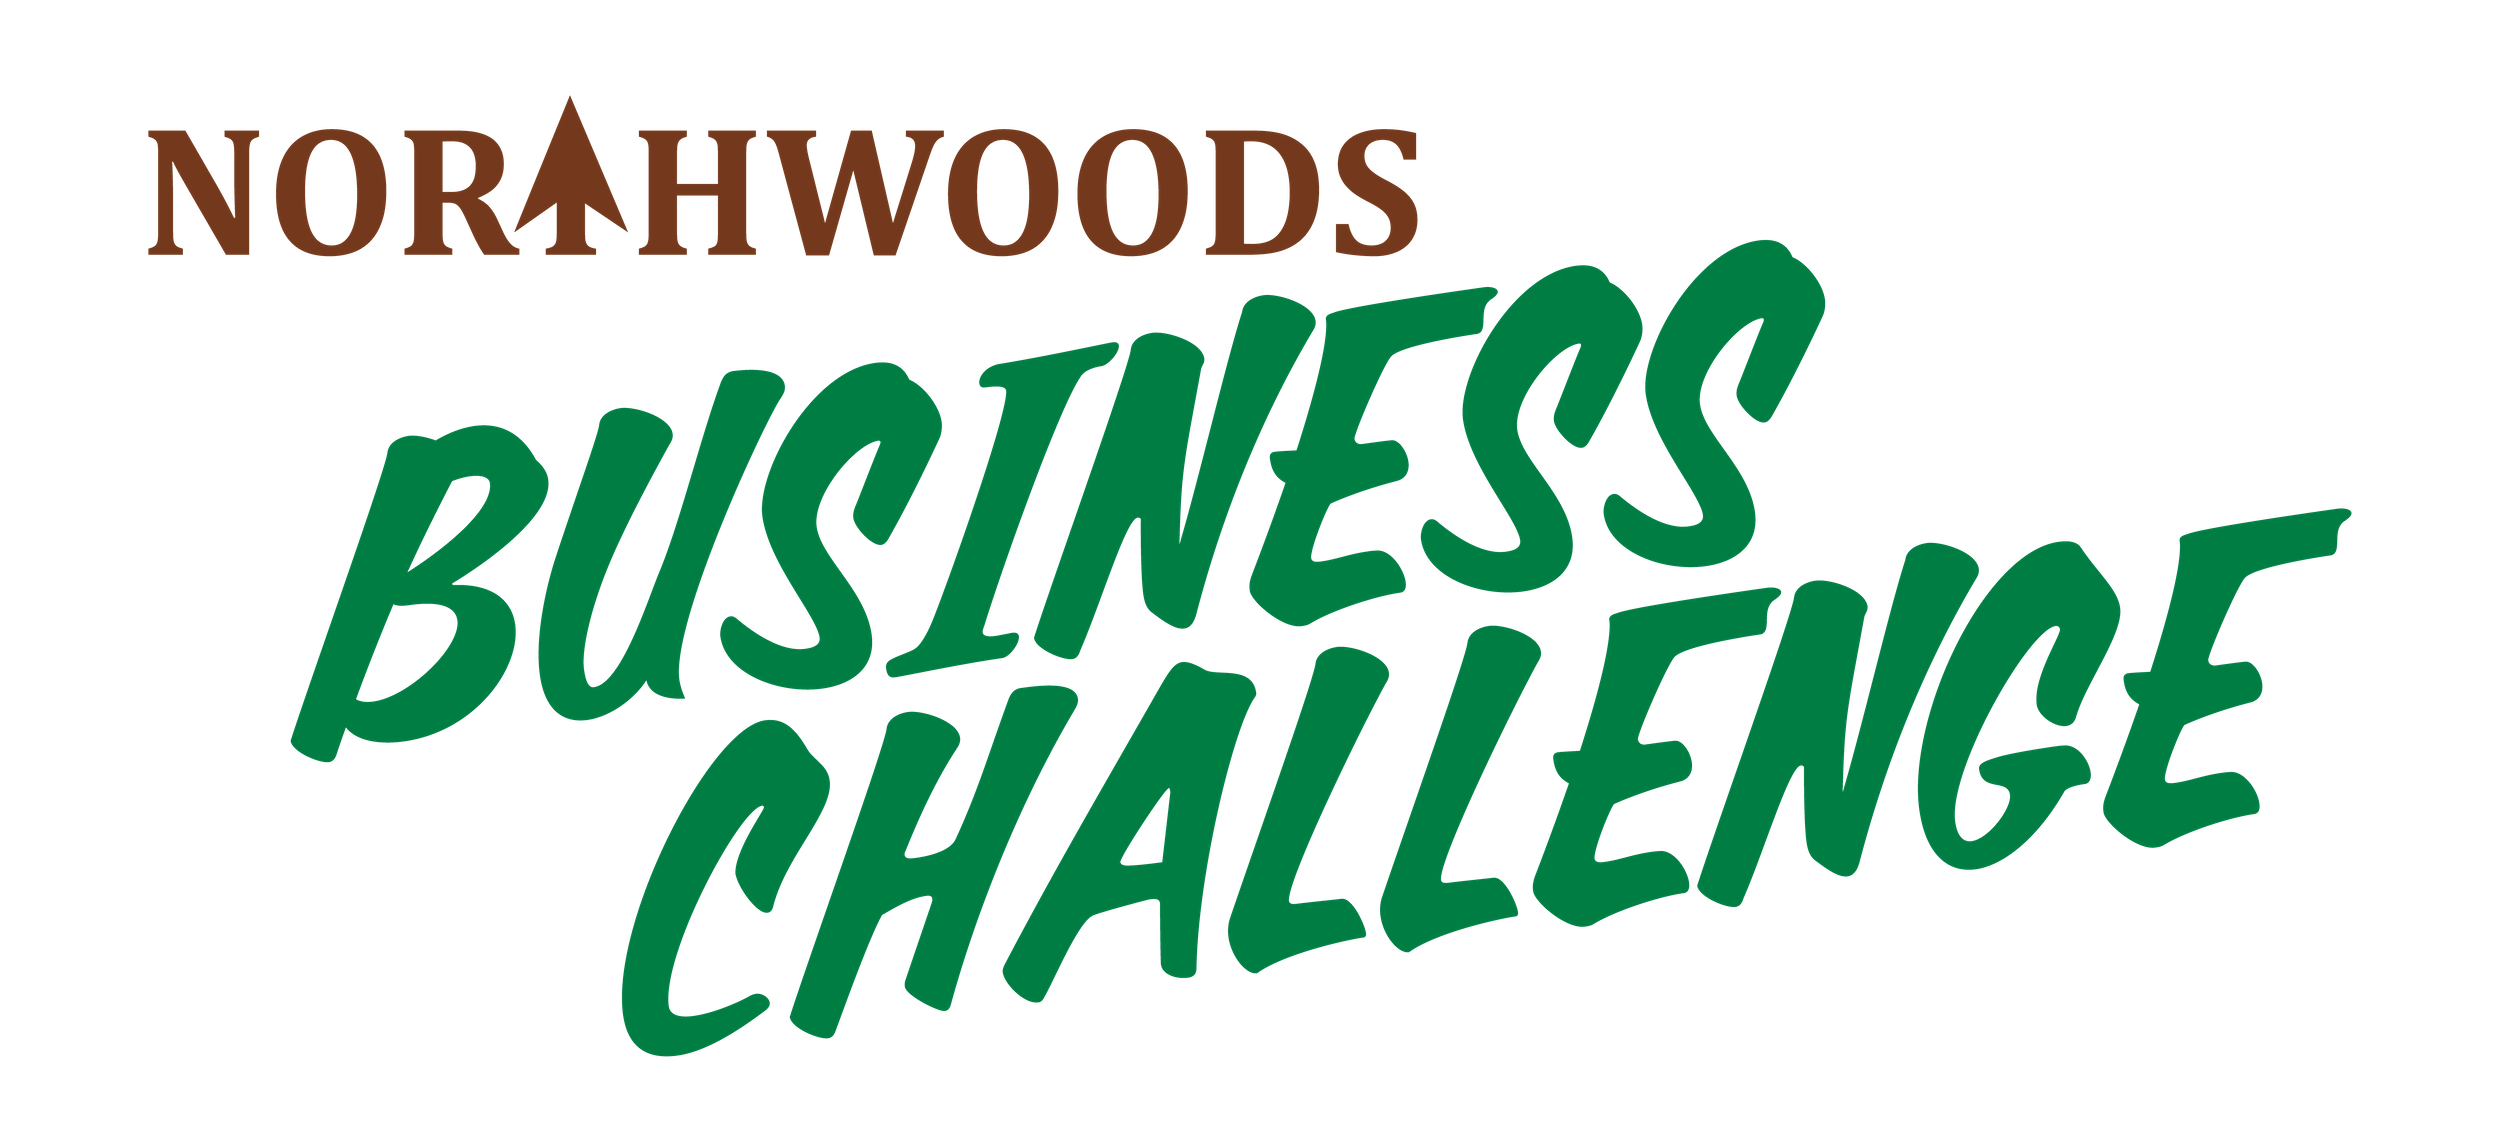 Northwoods Business Challenge